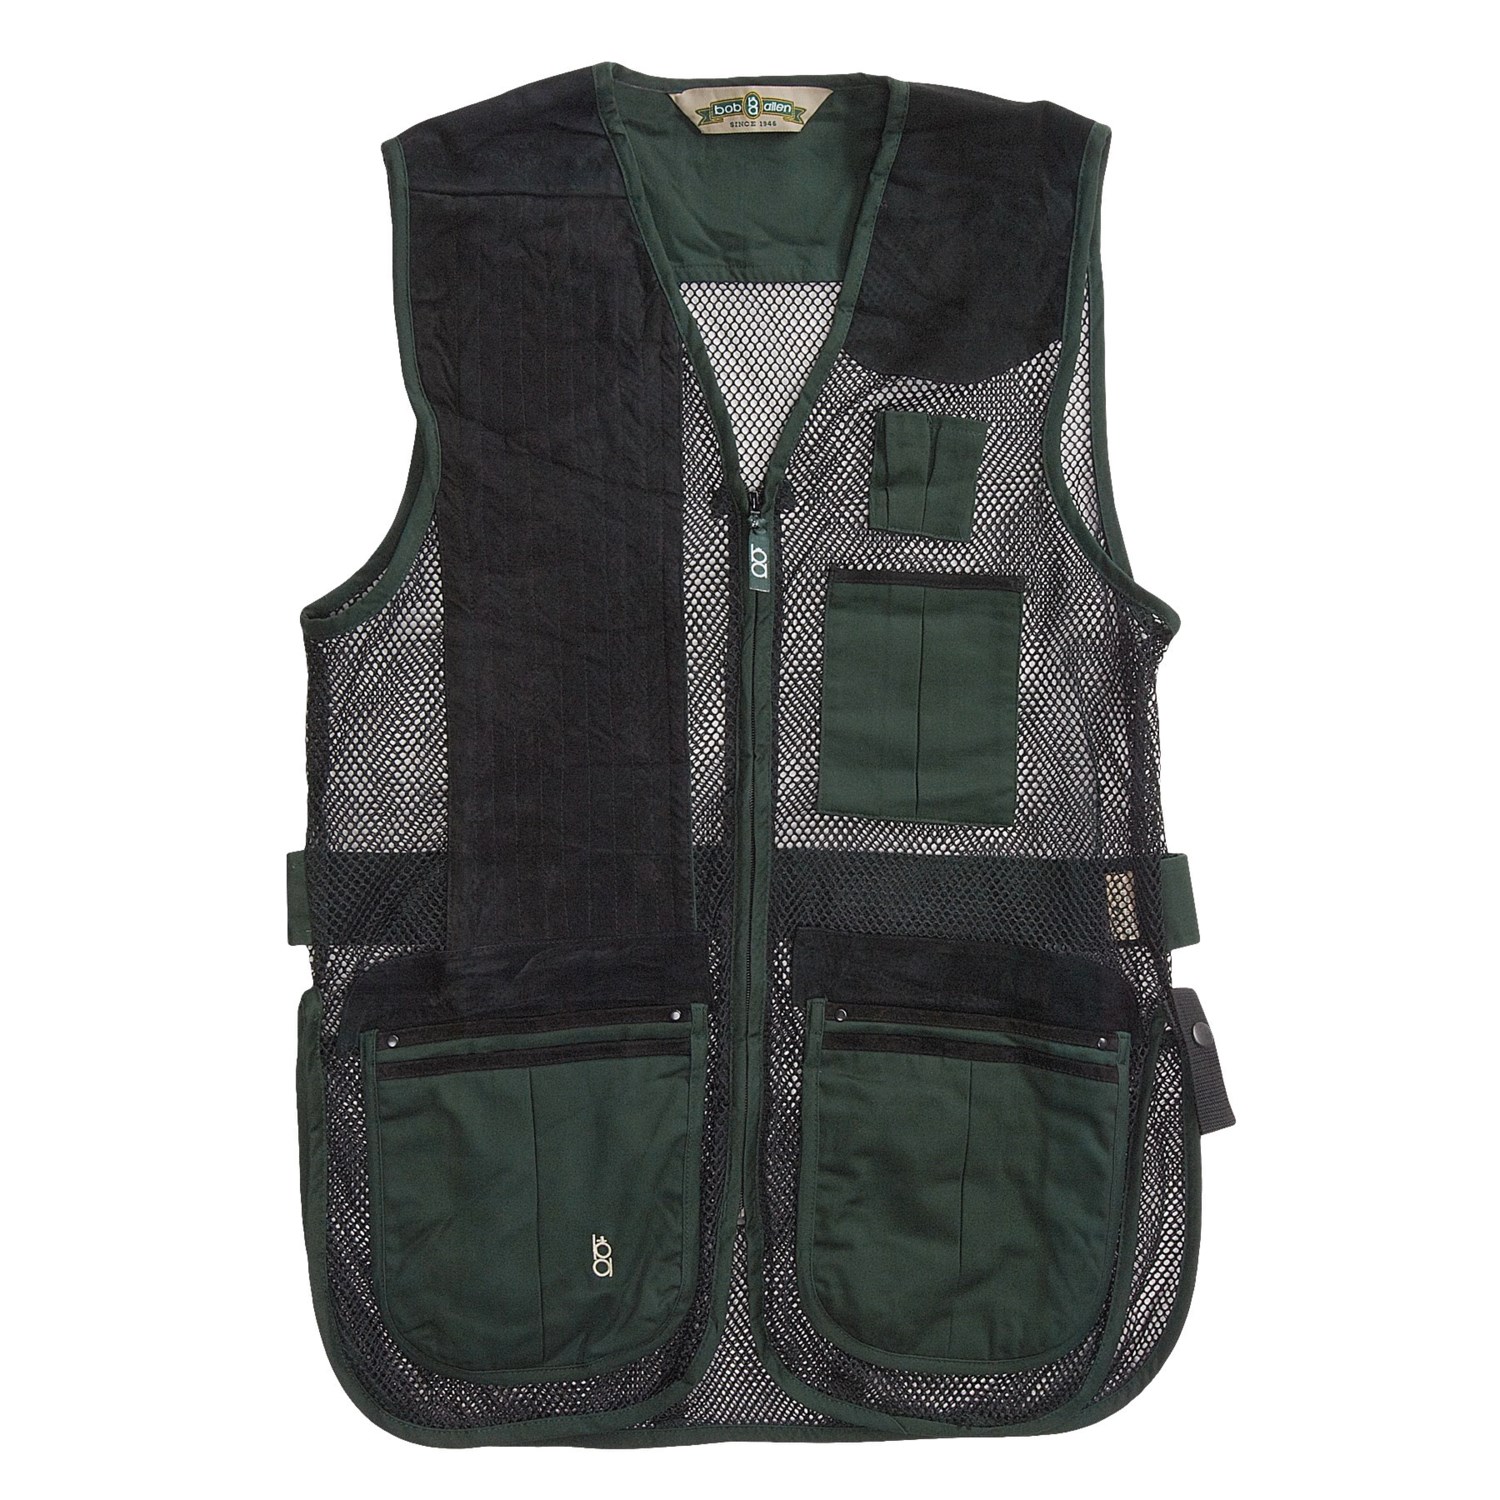 Bob Allen Shooting Vest (For Men) 2493M - Save 38%